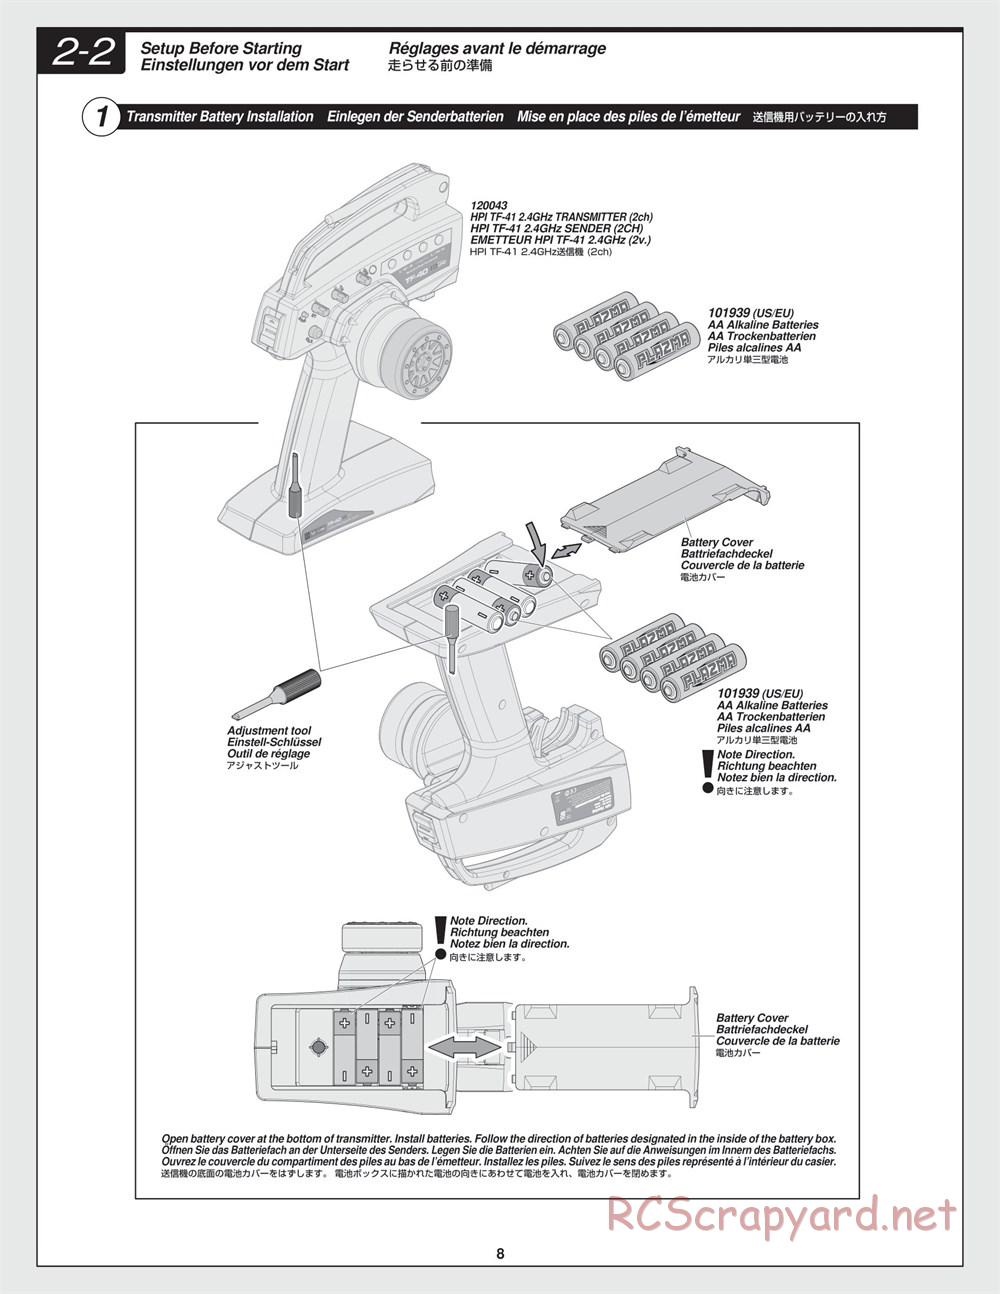 HPI - E10 Drift - Manual - Page 8